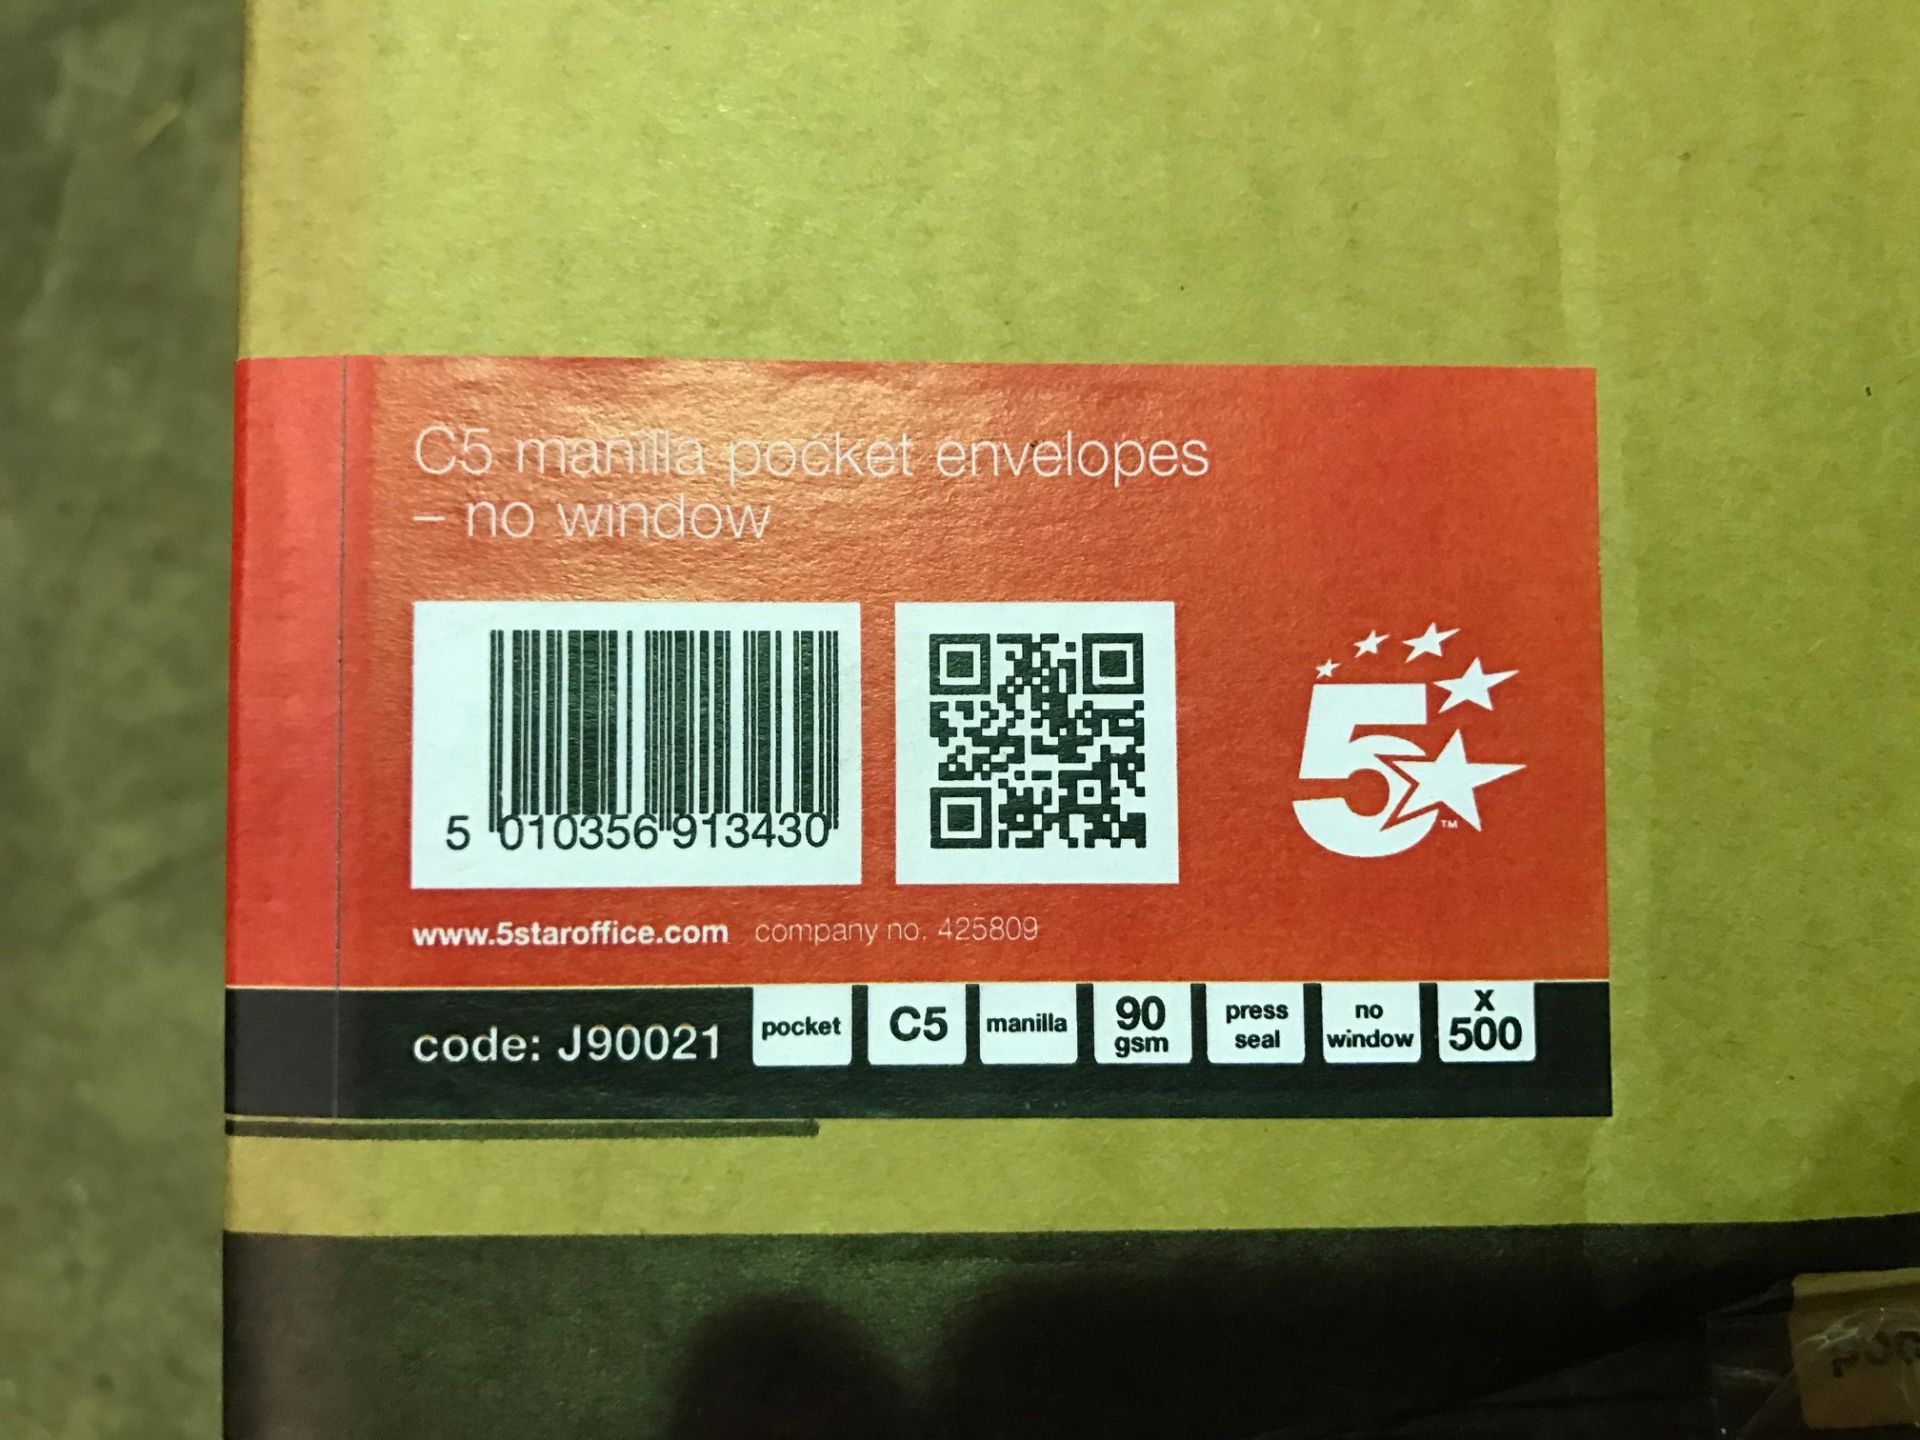 3 x Boxes of 5 Star C5 Manilla Pocket Envelopes - 1500 Envelopes Total, RRP £25 Per Box - Image 2 of 2